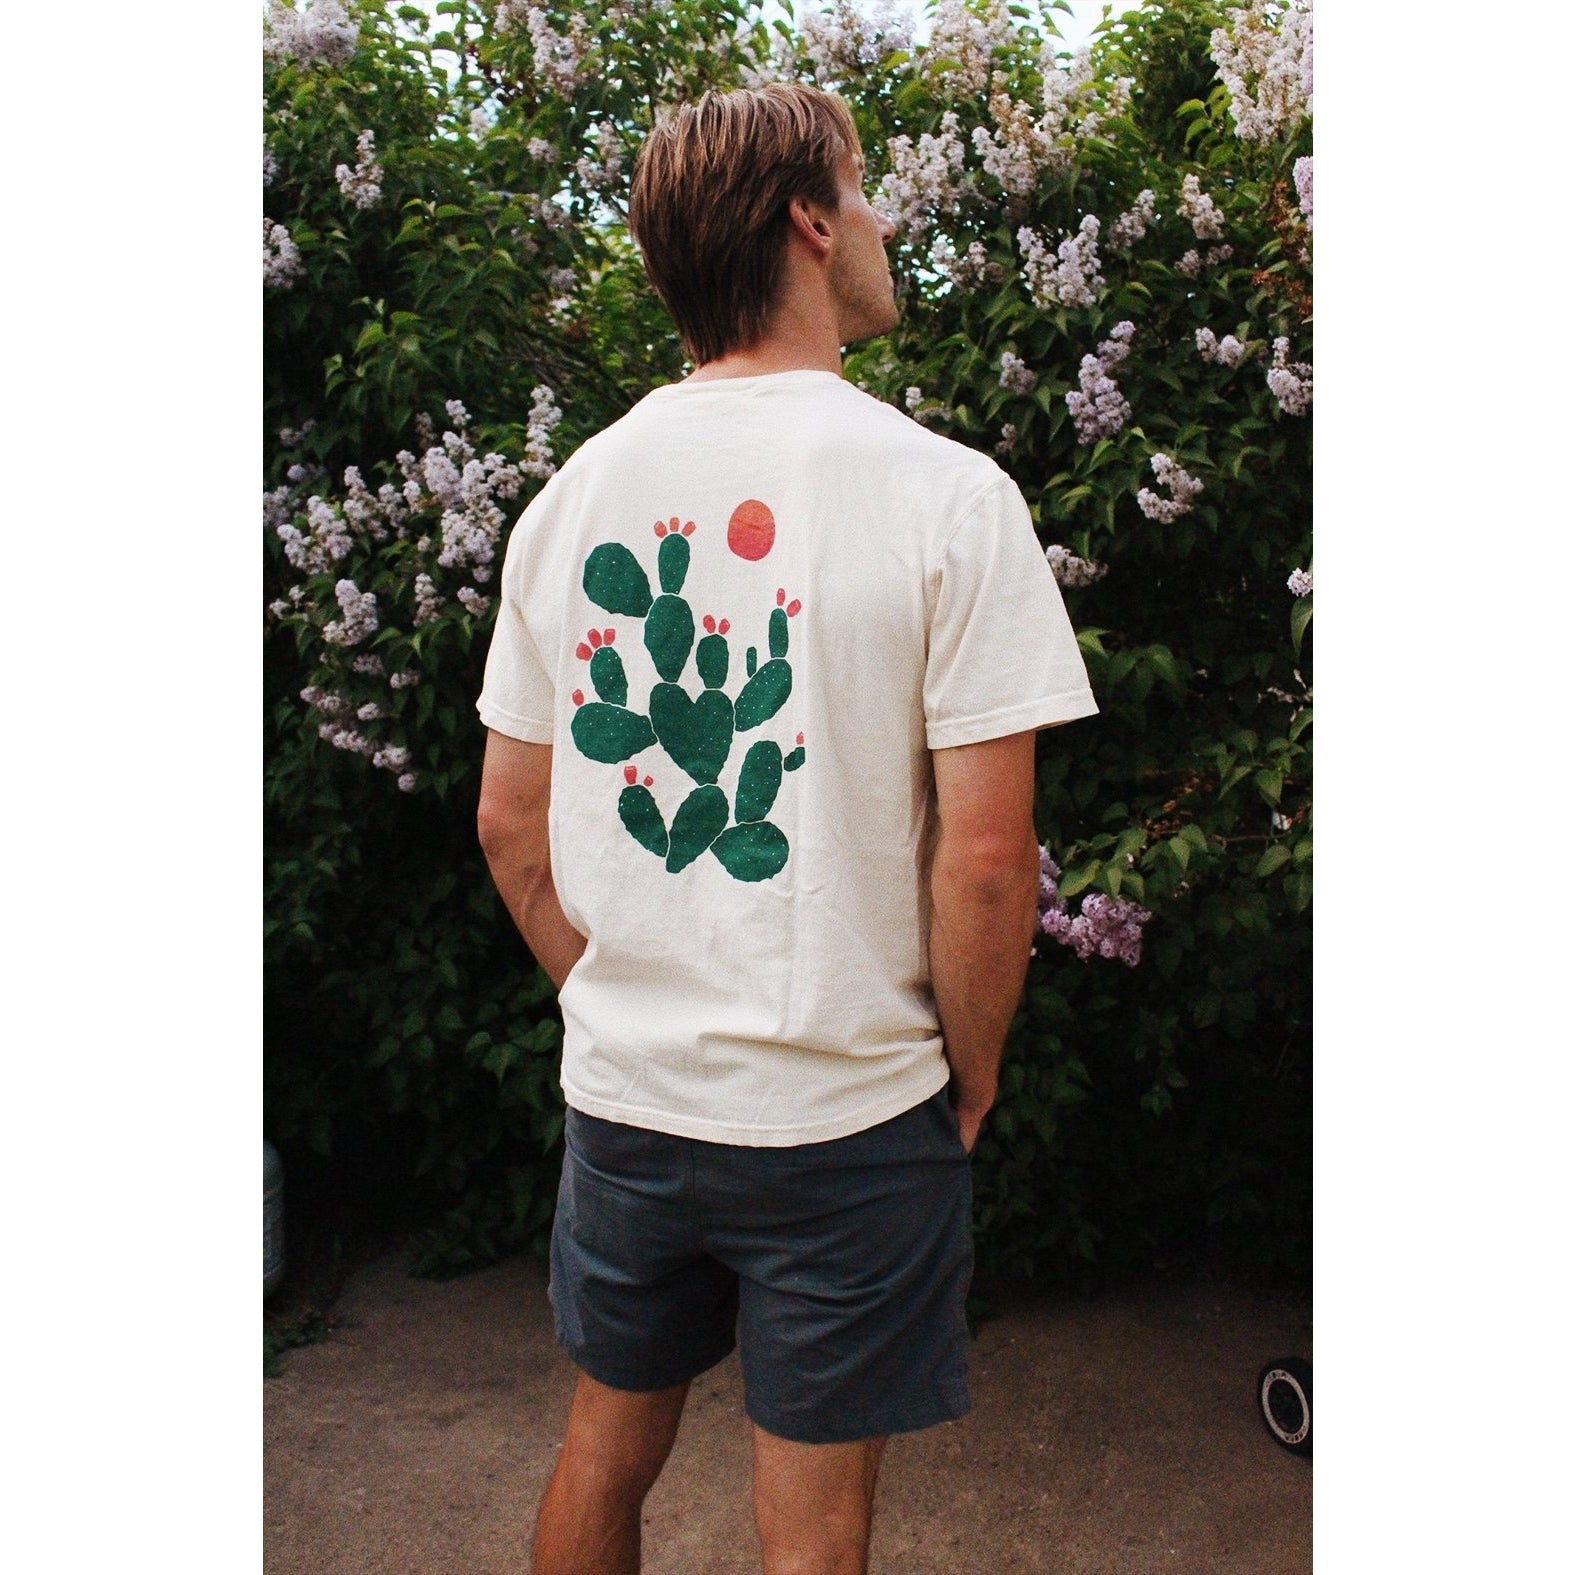 Akinz | We All Walk Under The Same Sun Cactus Tee Shirt, T-Shirts, Akinz, Defiance Outdoor Gear Co.